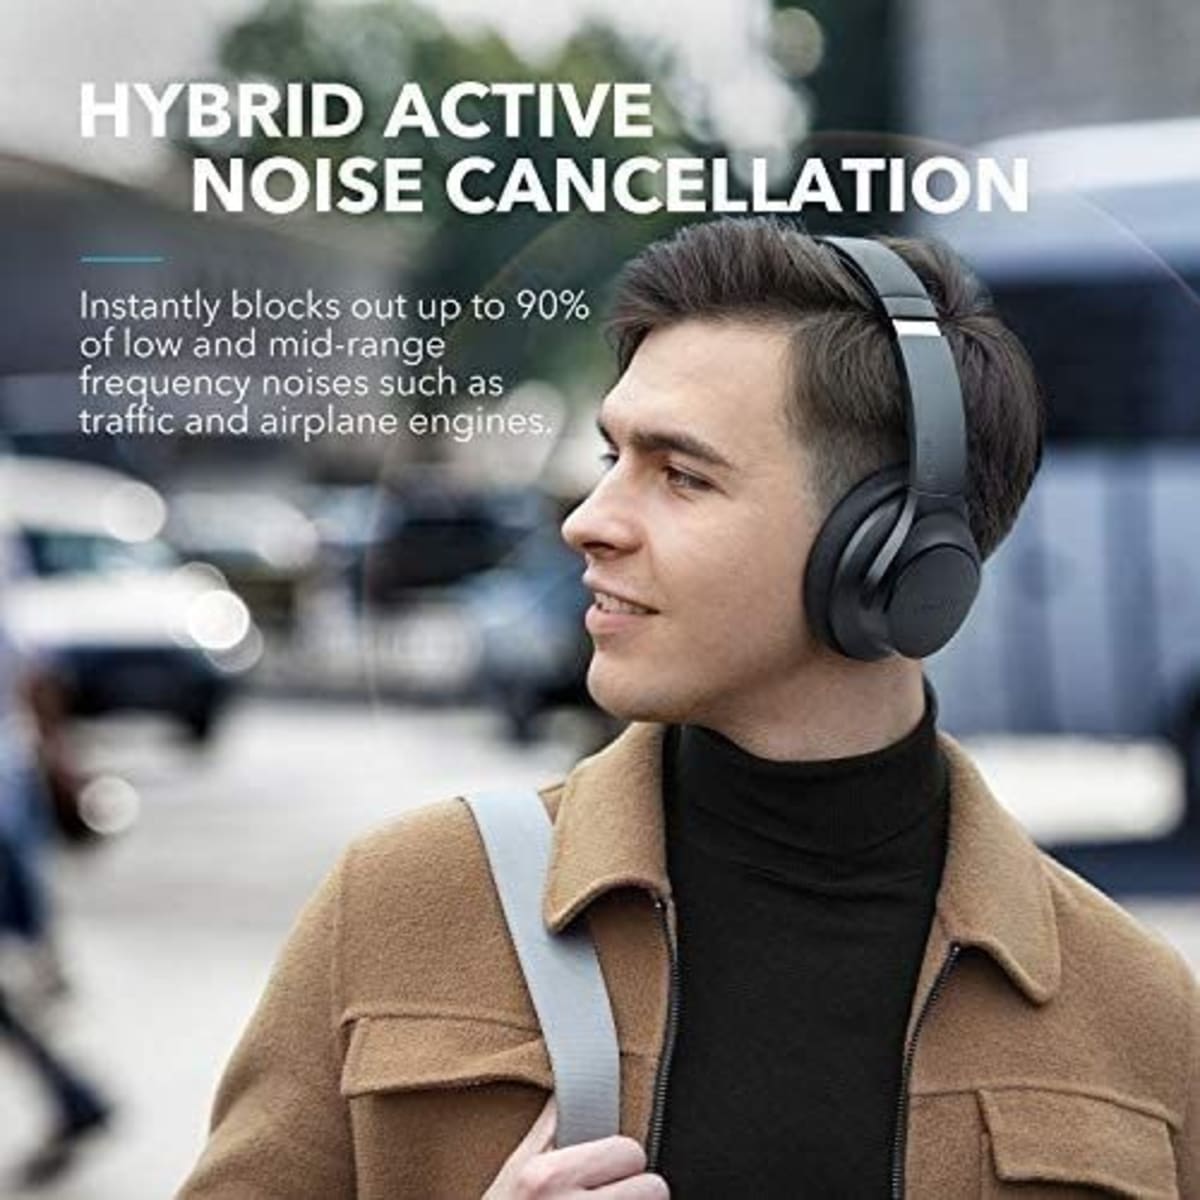 soundcore By Anker- Life Q20+ SE Bluetooth Over-Ear Headphones, Hi